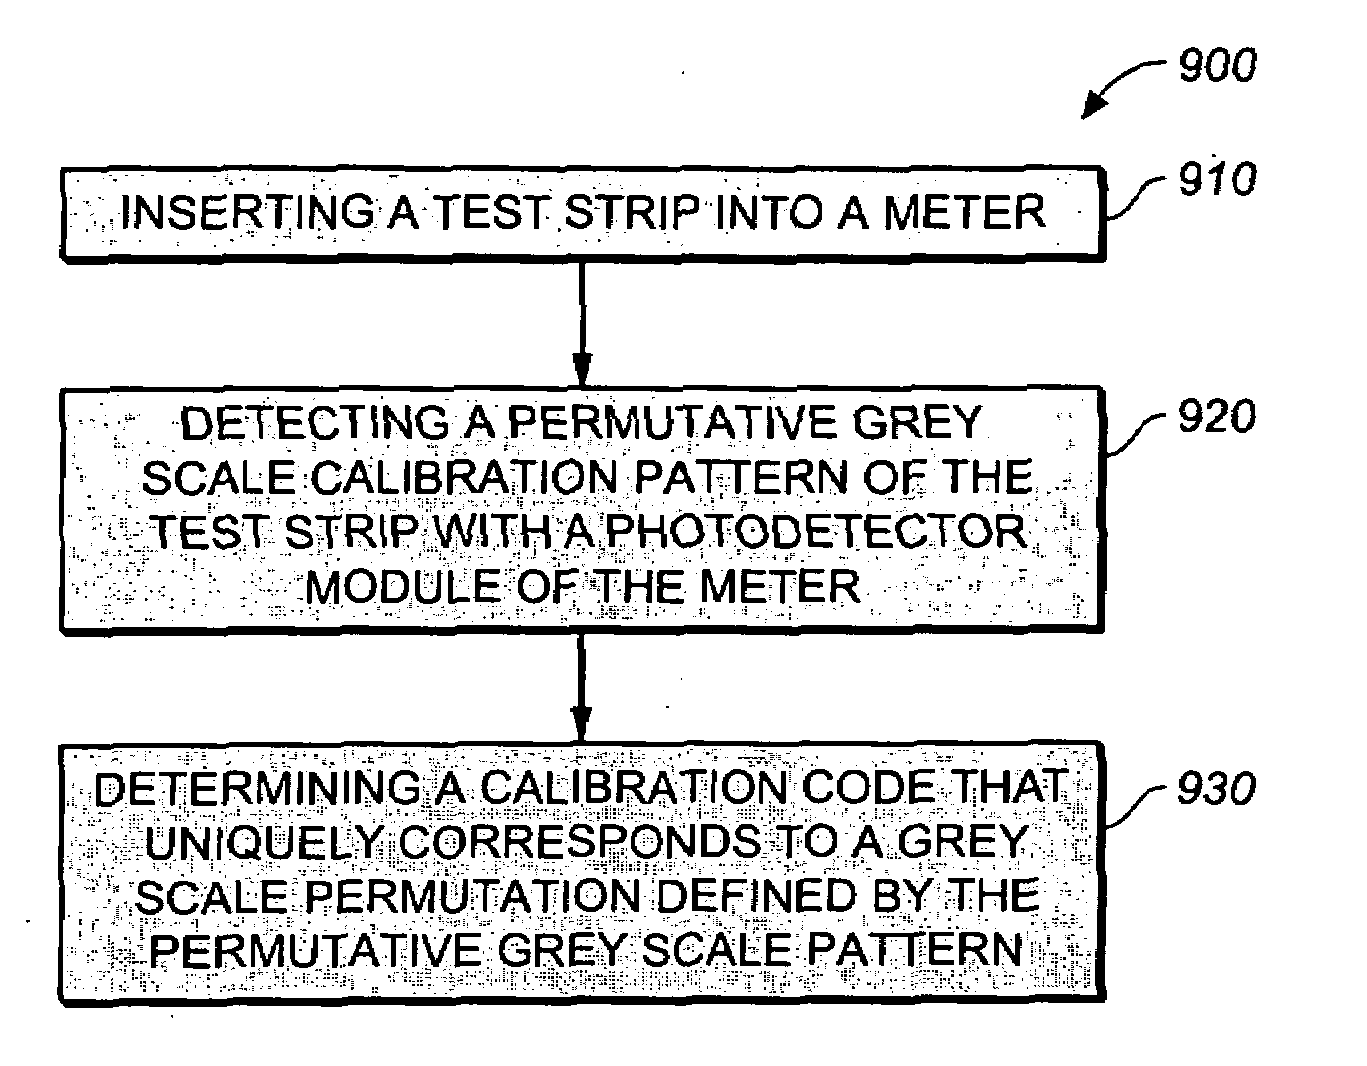 Calibration code strip with permutative grey scale calibration pattern